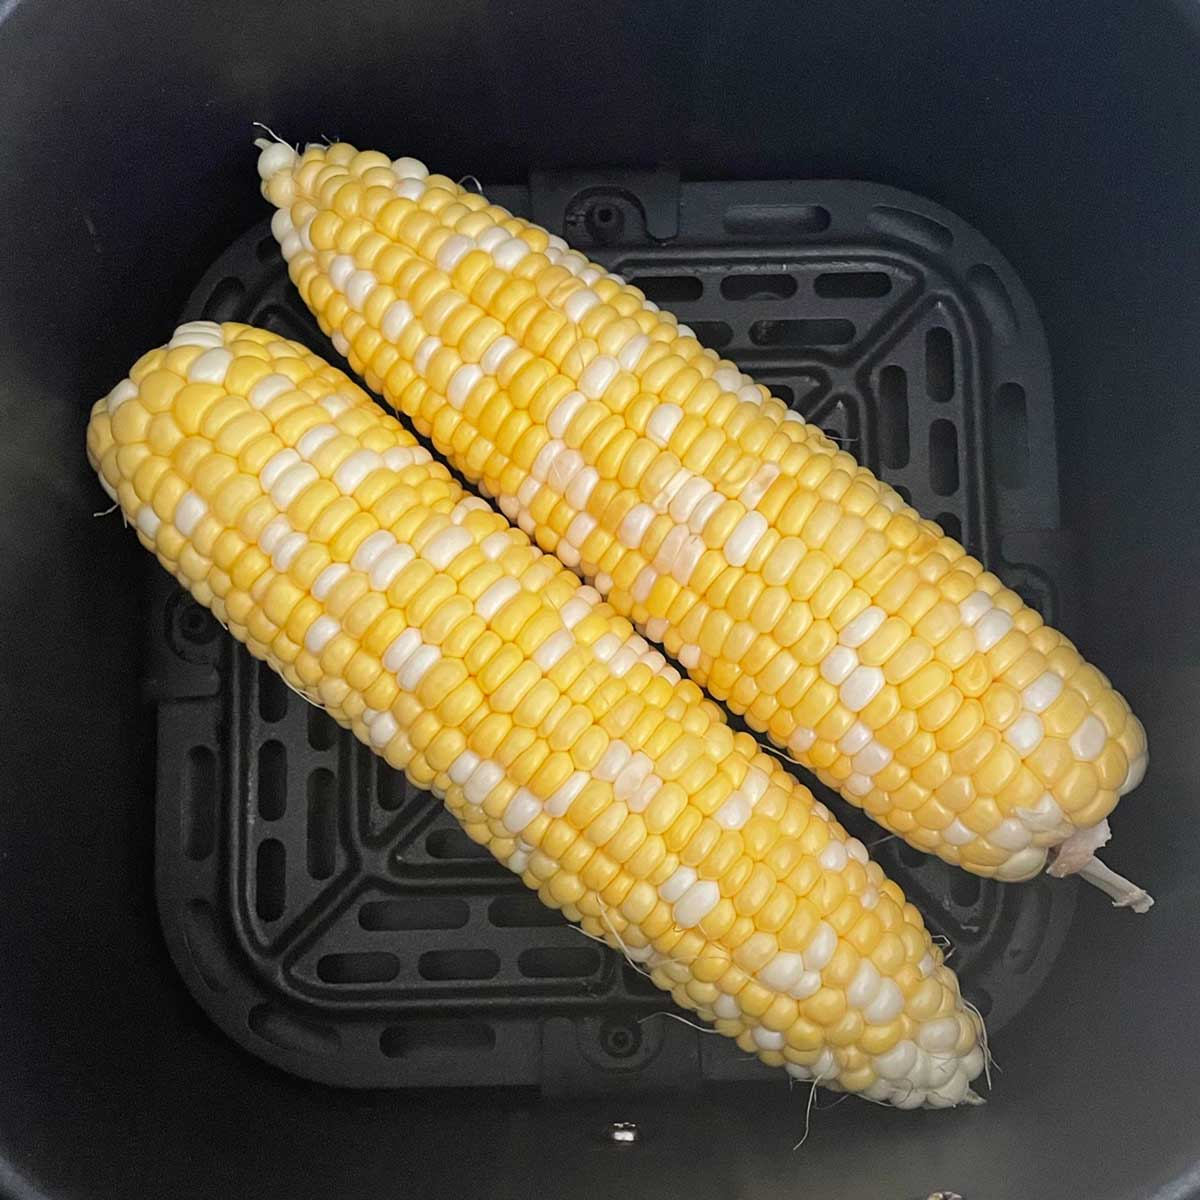 Corn on the cob in air fryer tub.